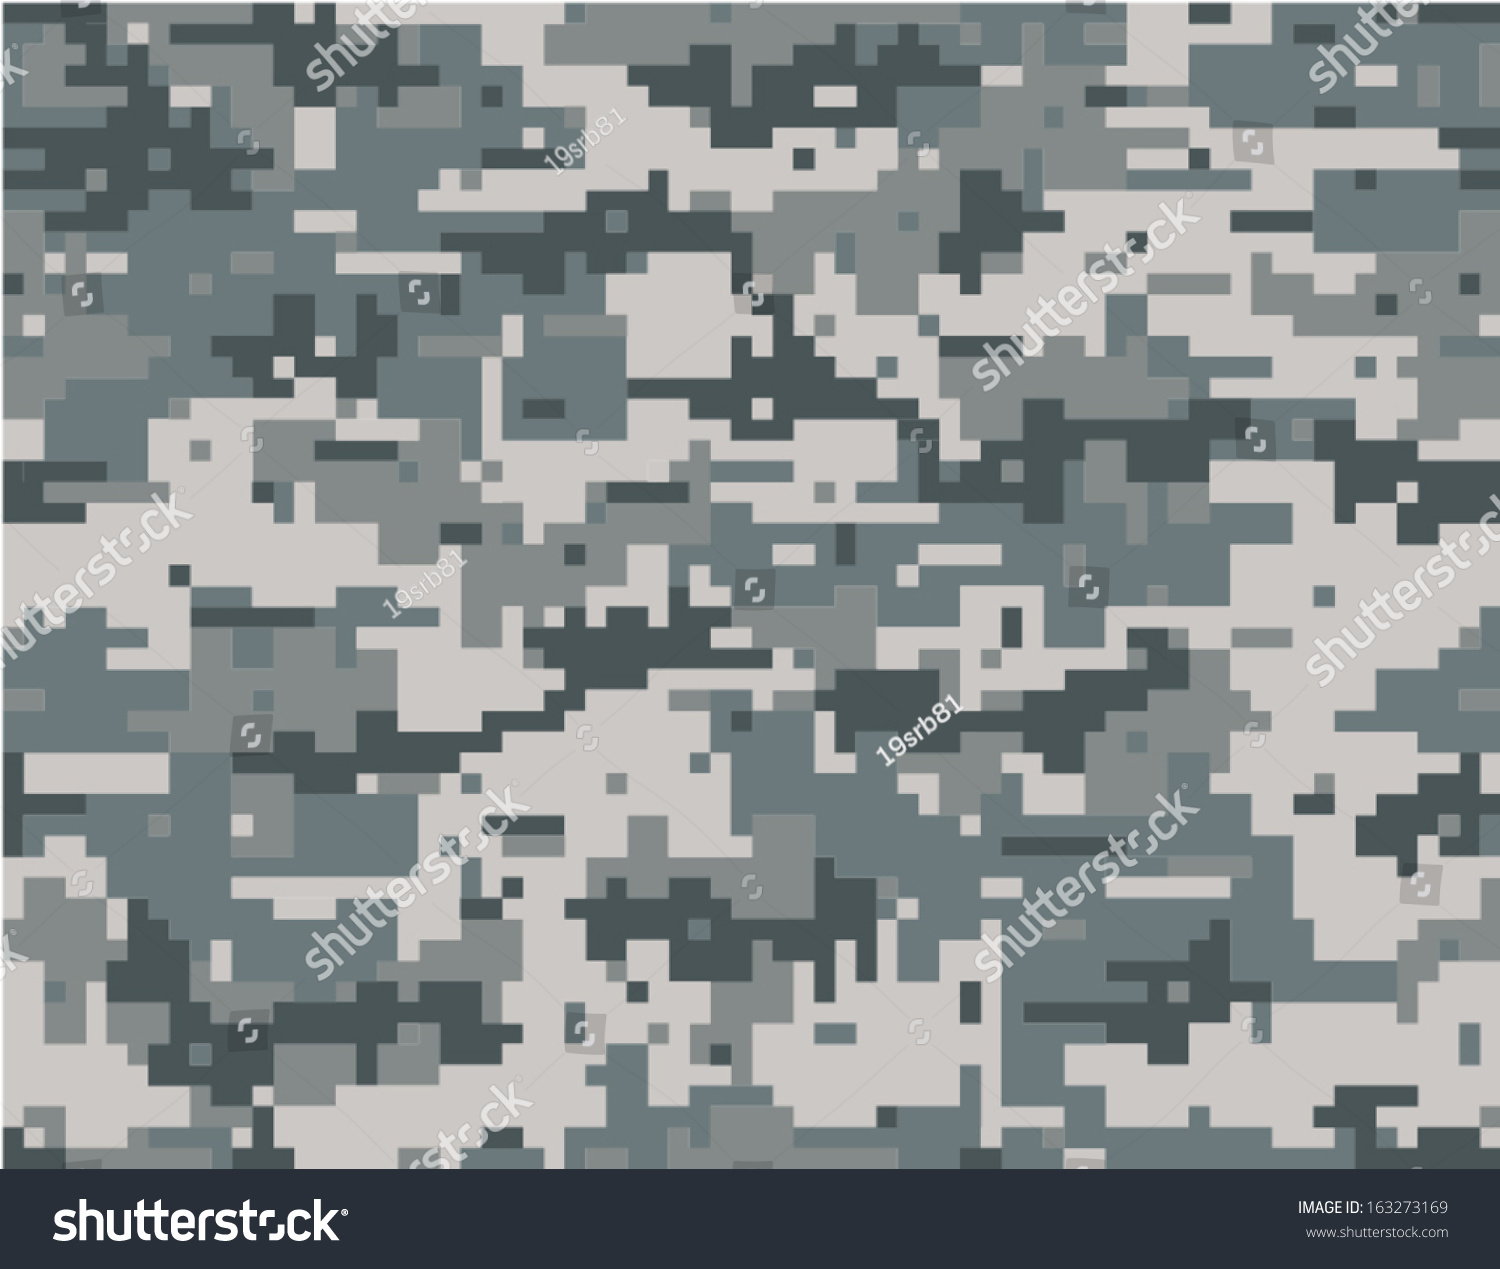 63,762 Digital camouflage Images, Stock Photos & Vectors | Shutterstock